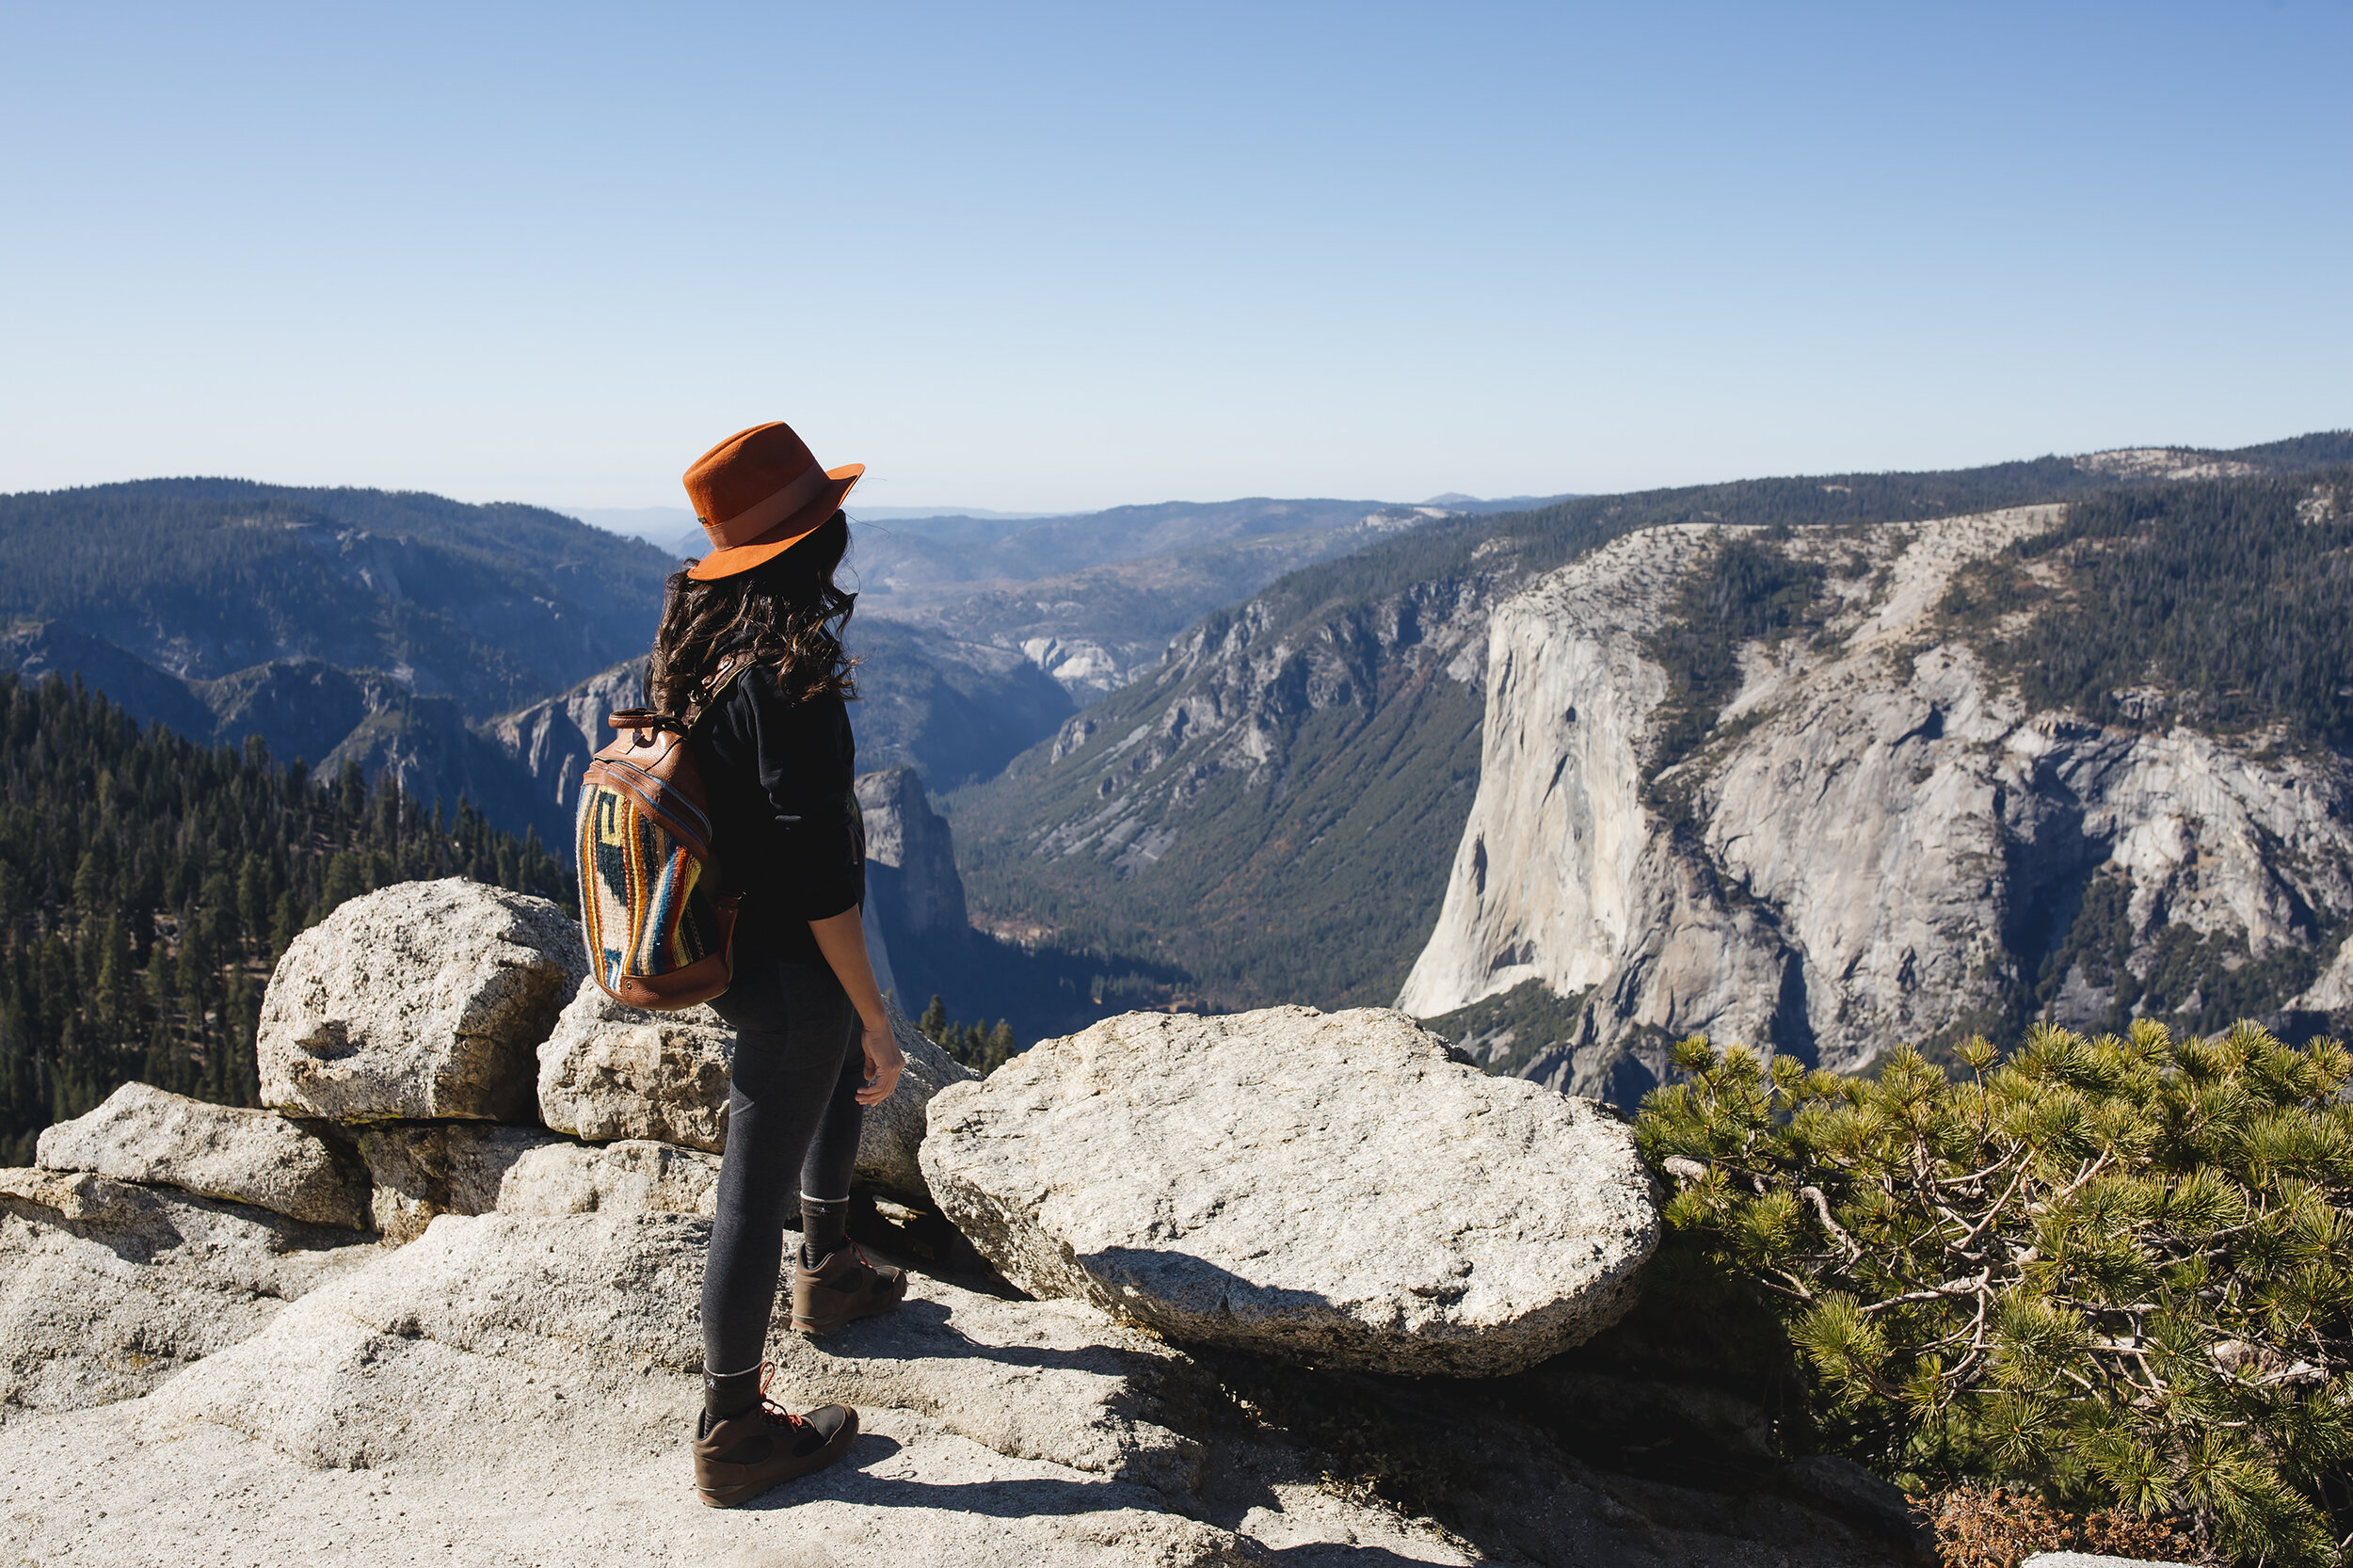 City Guide: The Stunning Granite Rock Faces of Yosemite